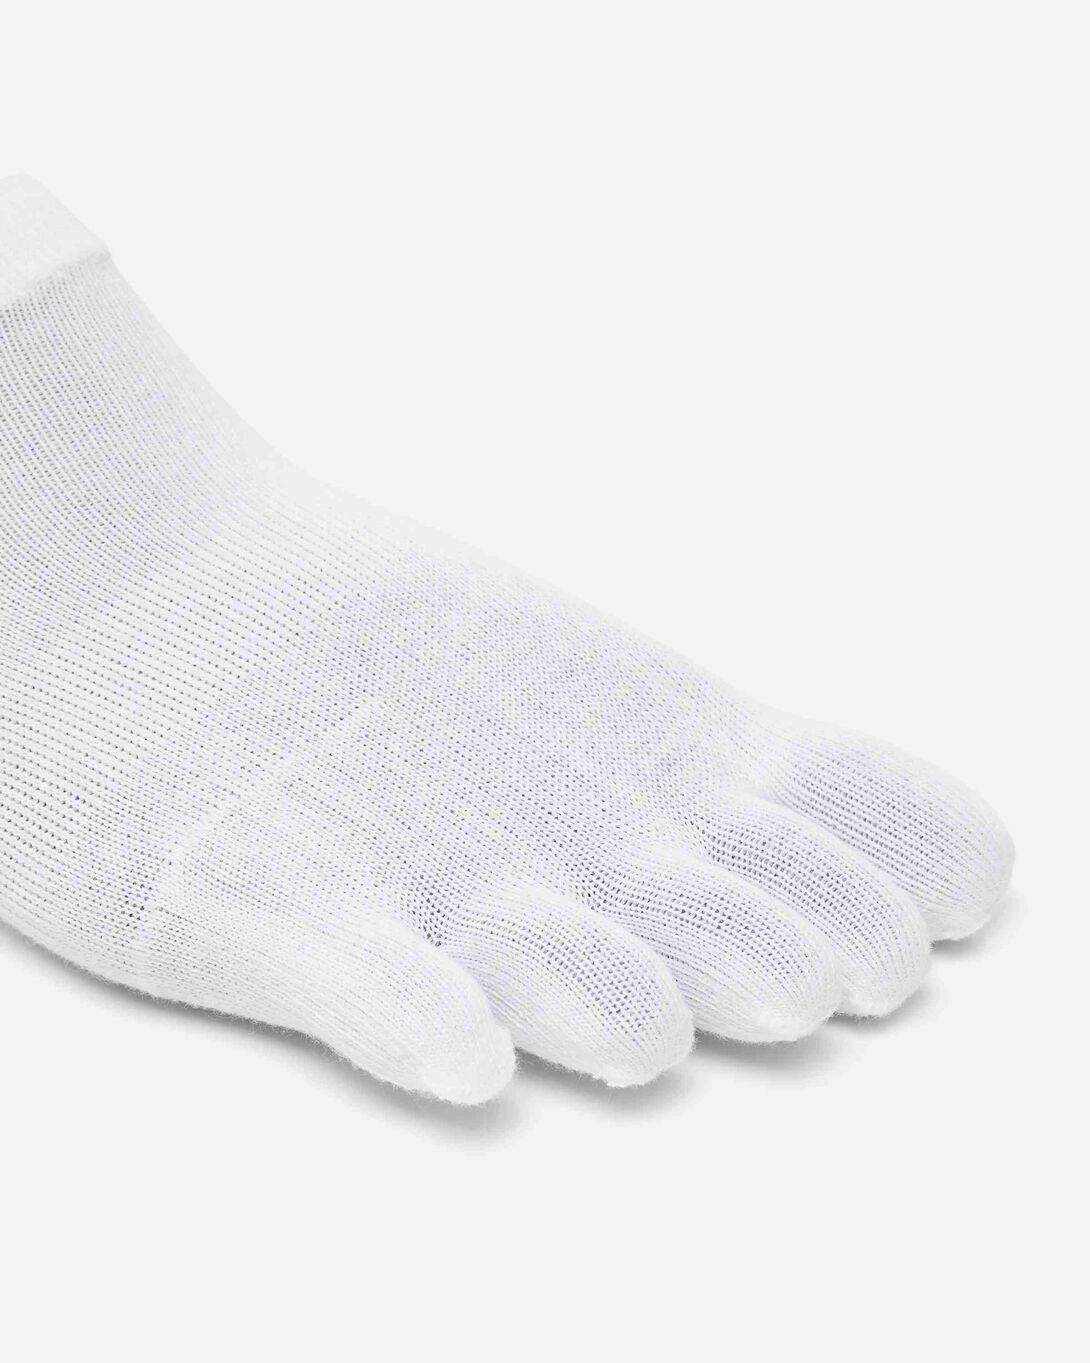  VWELL Mens Cotton Toe Socks Five Finger Socks No Show Crew  Athletic Socks For Running 4 Pairs